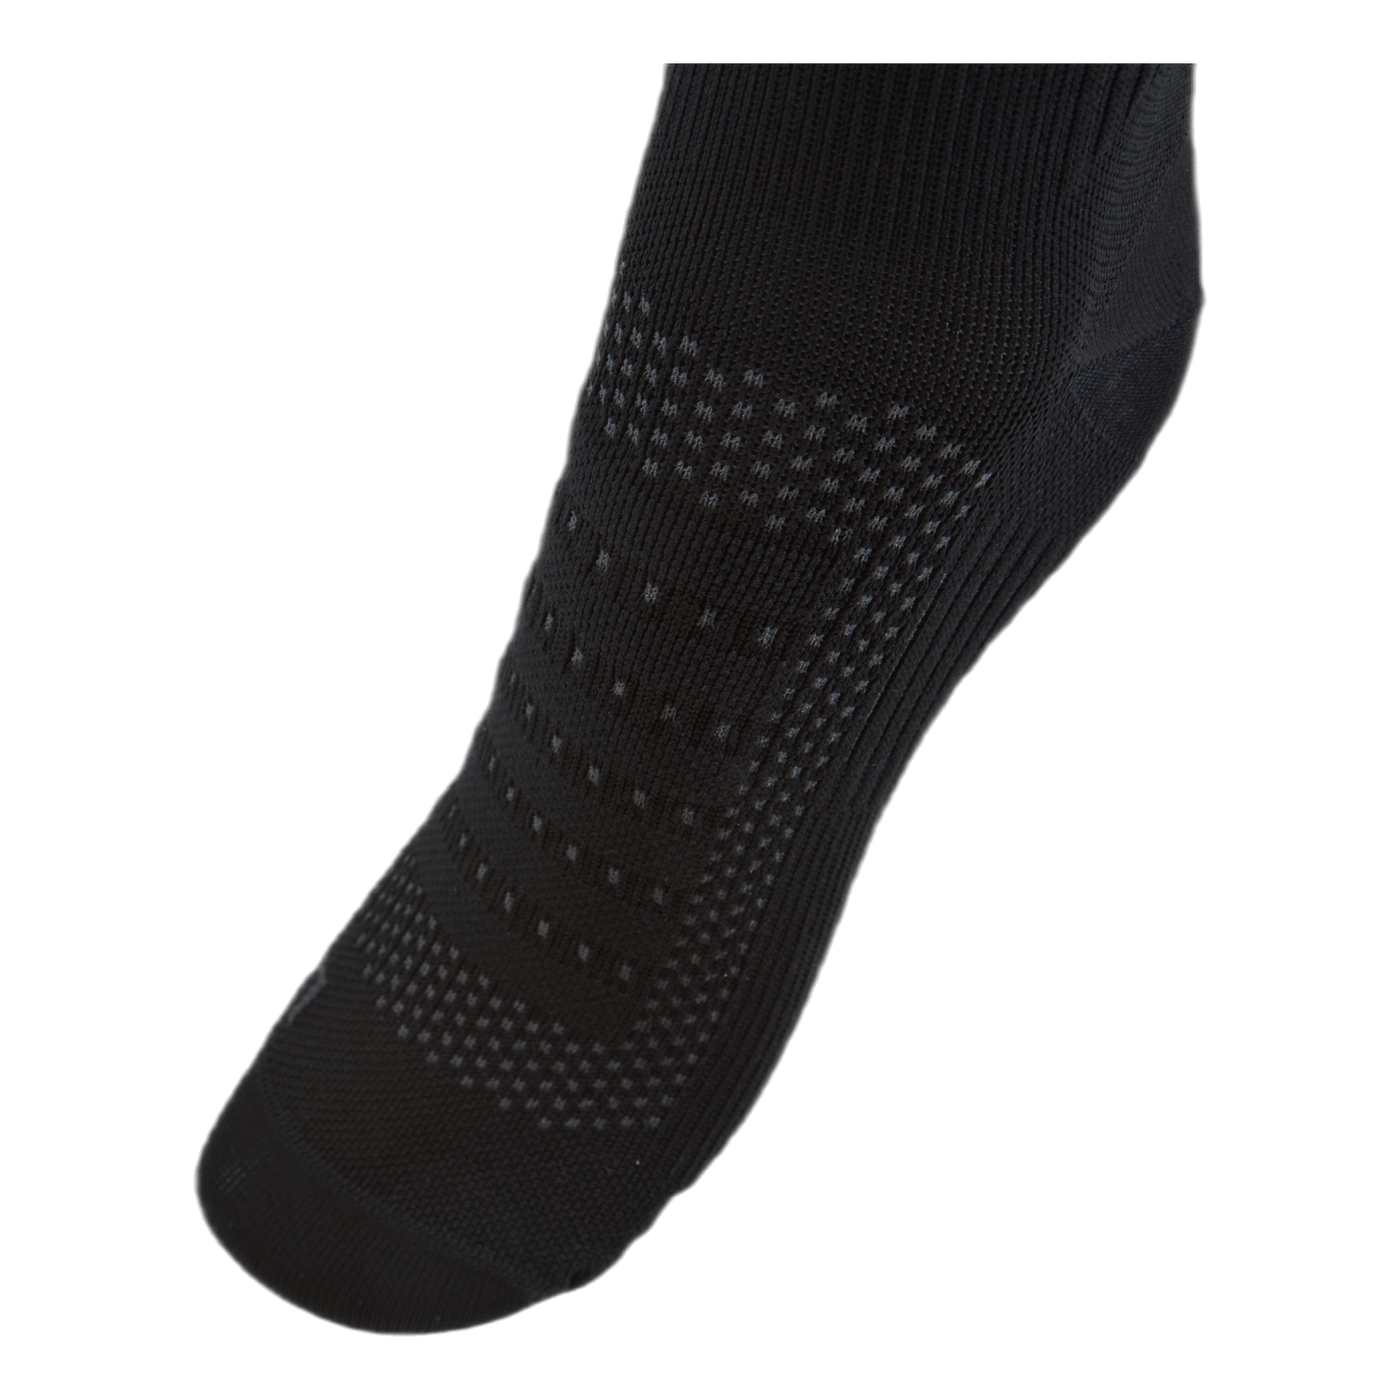 ADV Dry Compression Sock Black